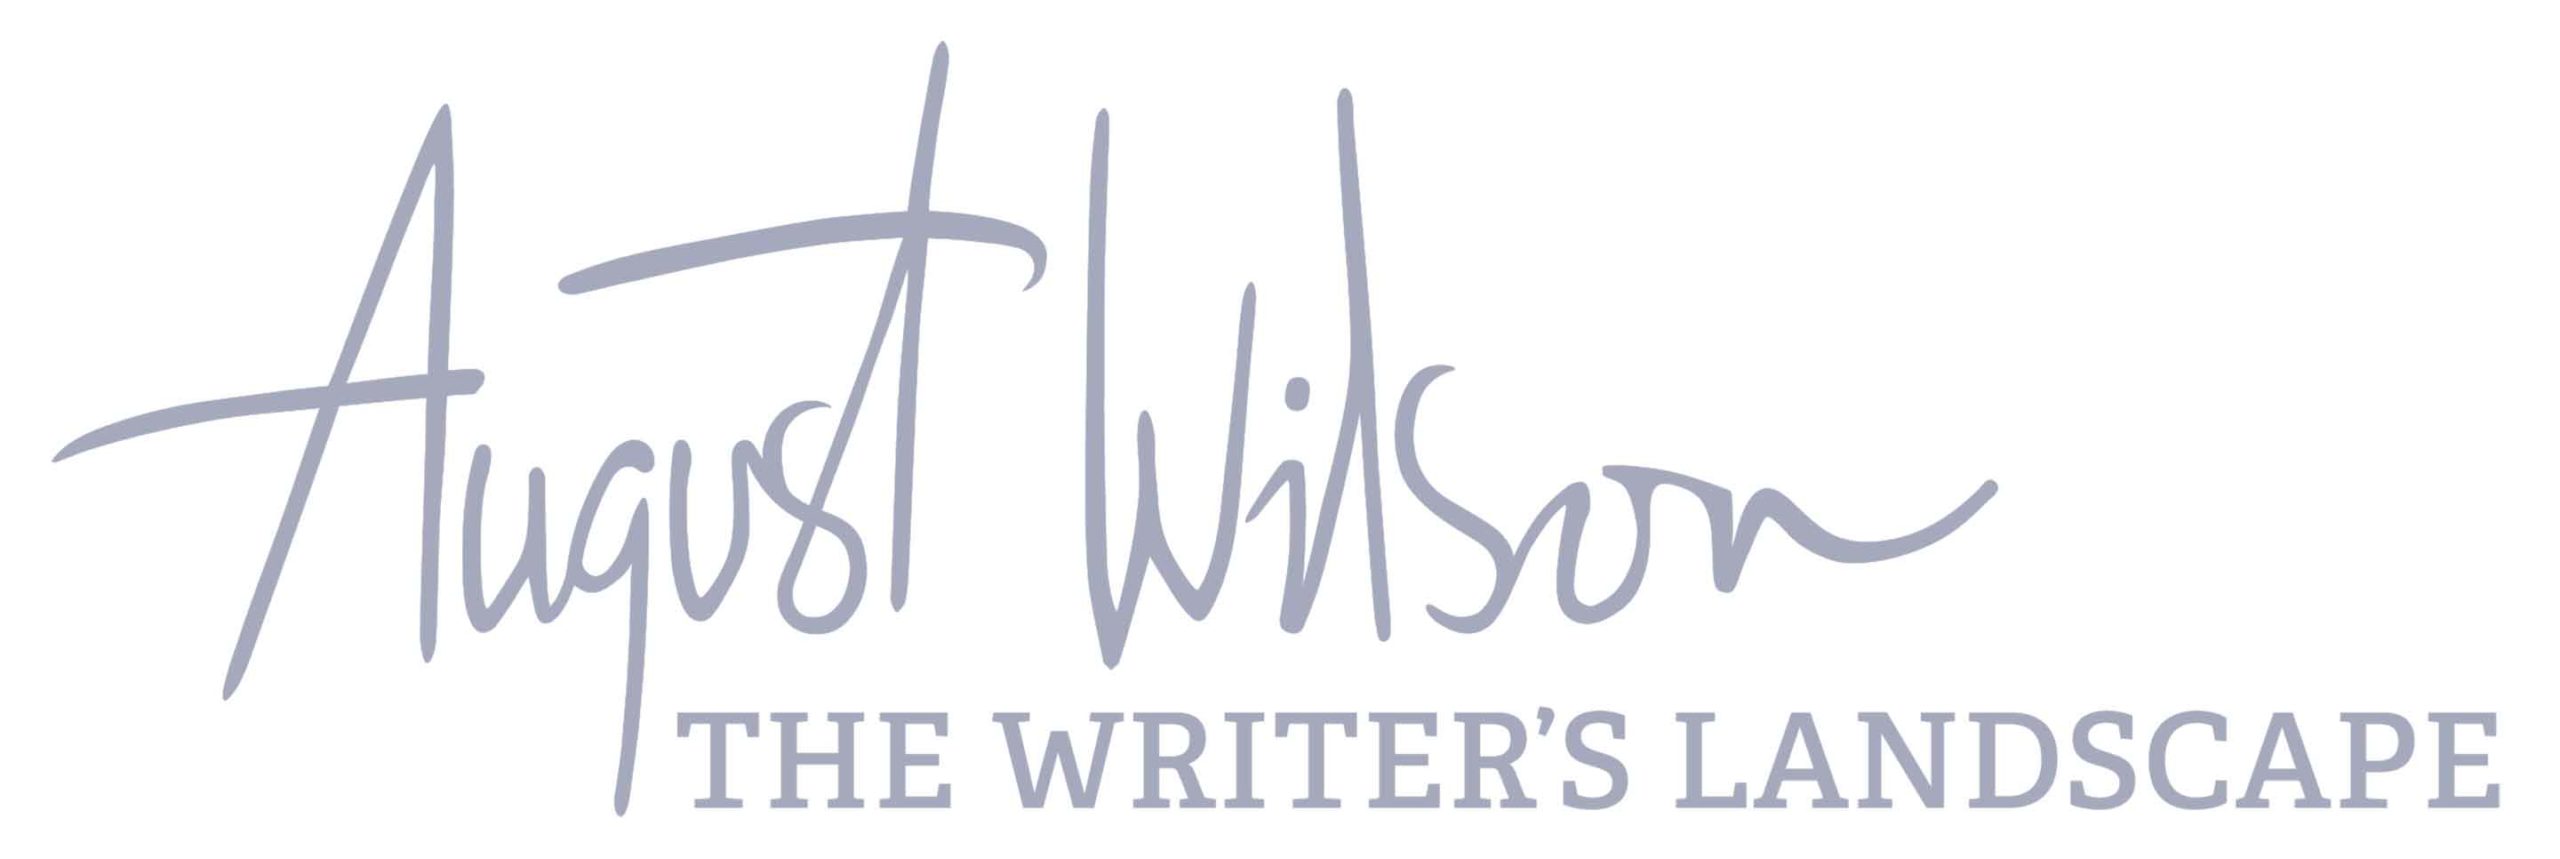 August Wilson: The Writer’s Landscape